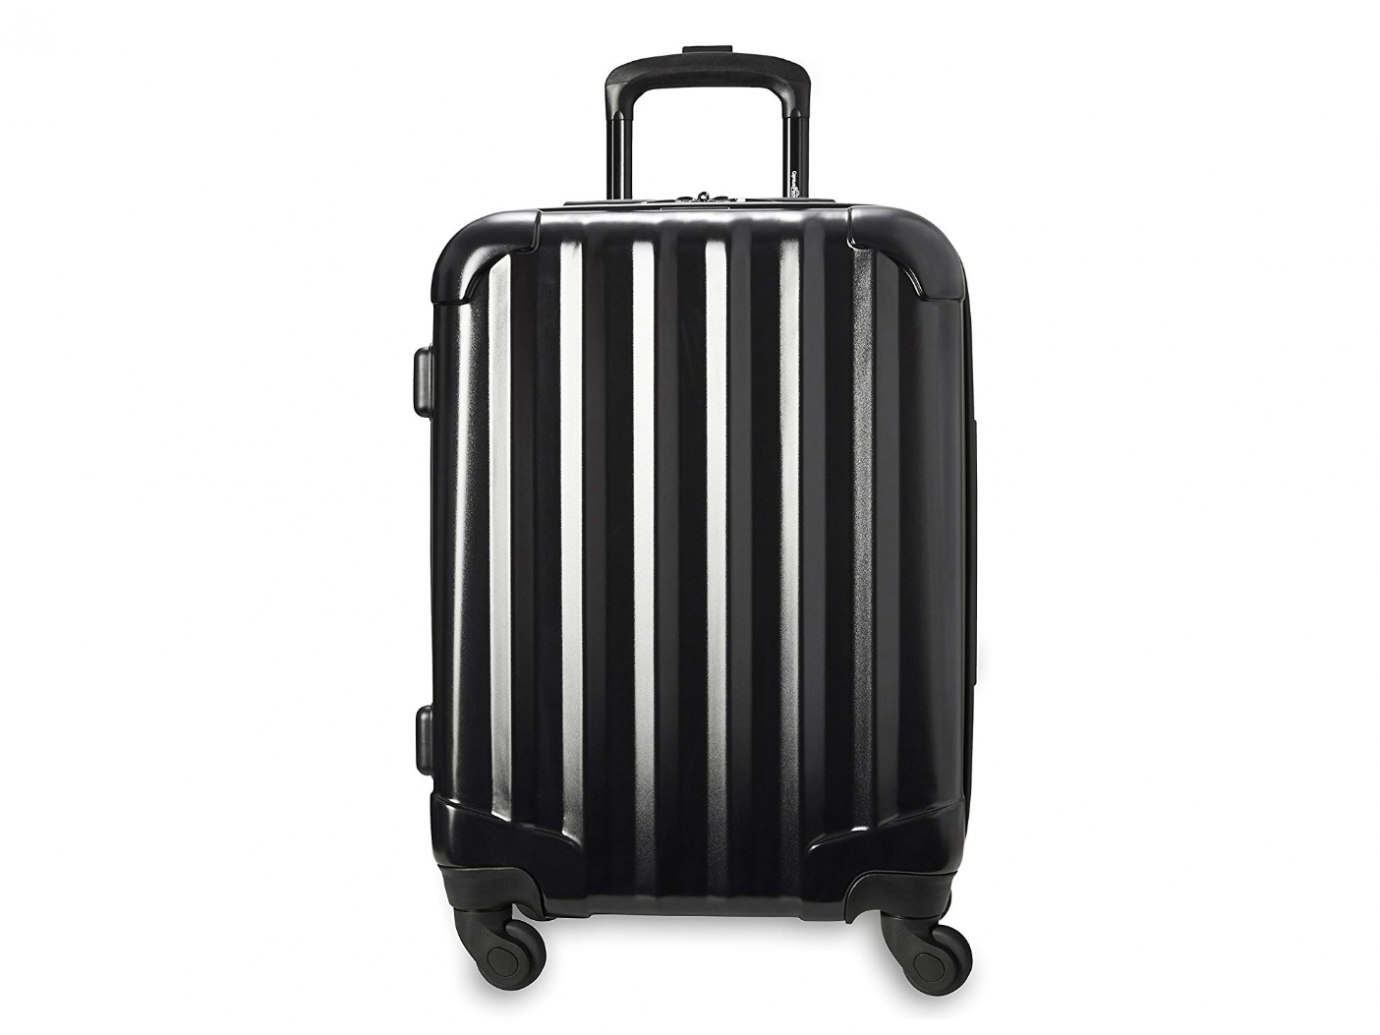 Suitcase by Genius Pack